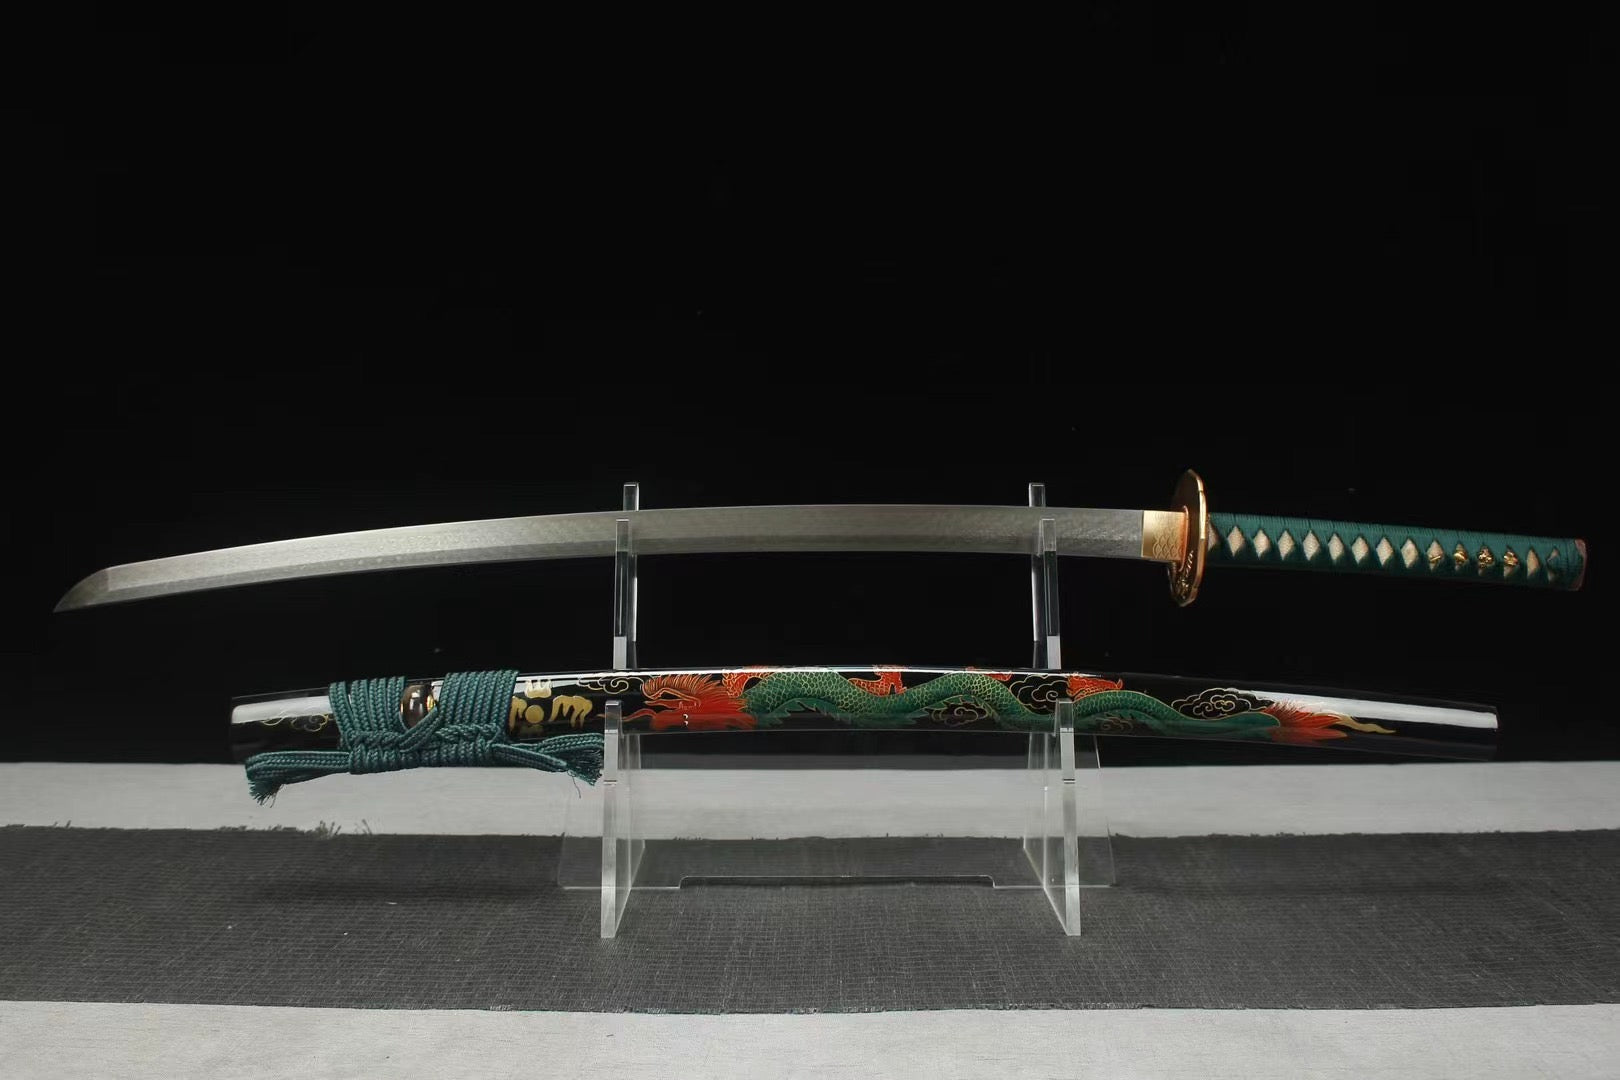 Damascus Steel Sword Green Dragon Katana Sword,Real Handmade Japanese Samurai Sword Full Tang